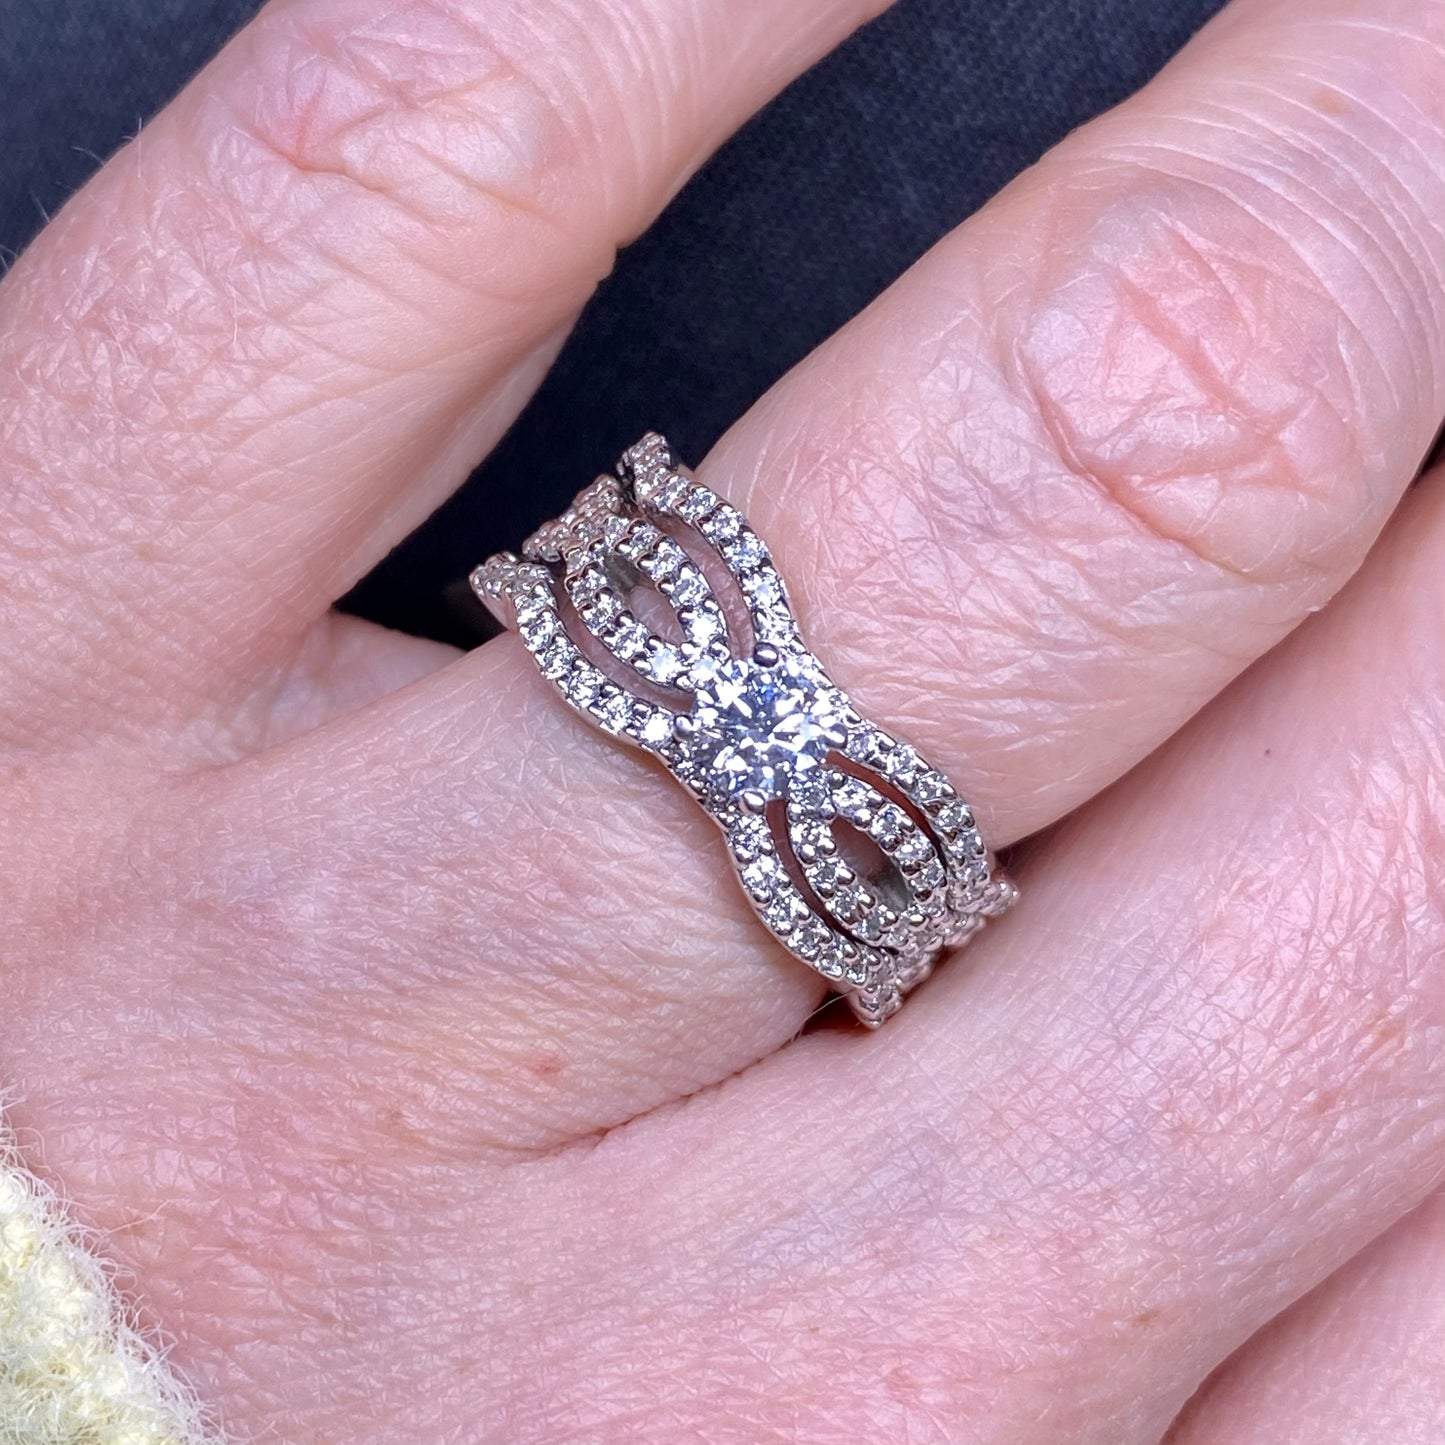 18ct White Gold Diamond Set Eternity/Wedding Ring | Infinity Fit - John Ross Jewellers